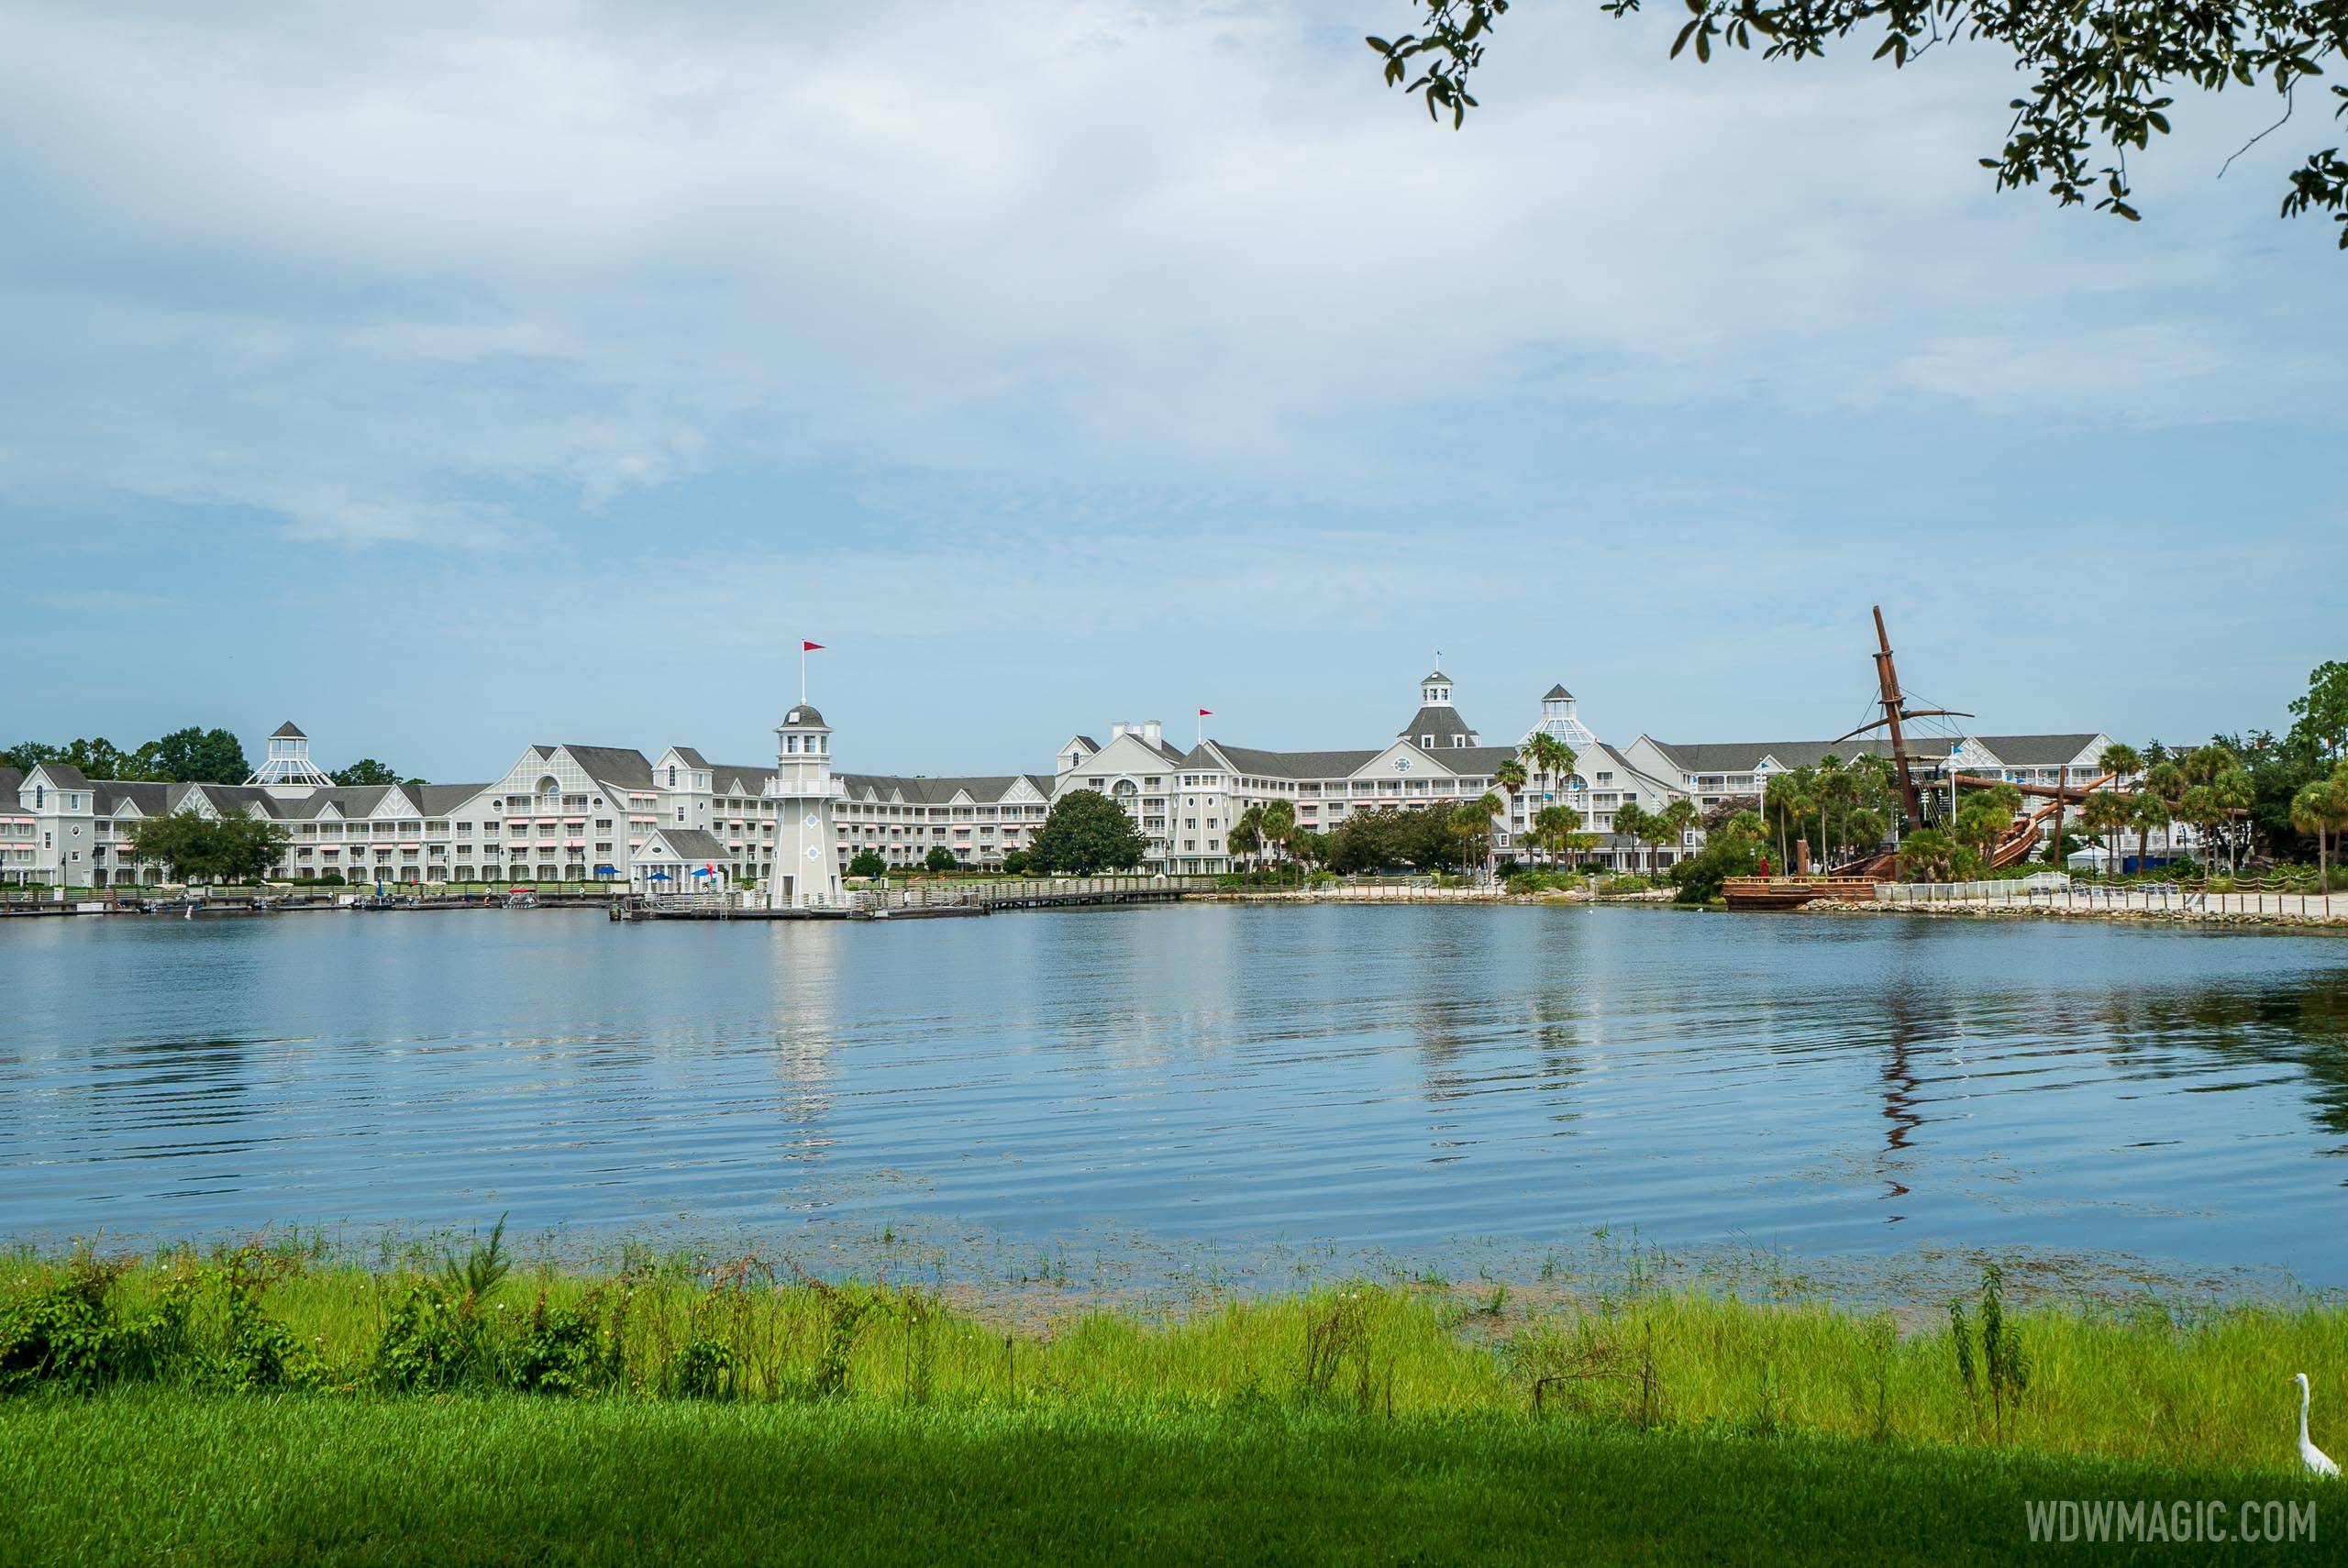 Disney's Yacht Club Resort overview